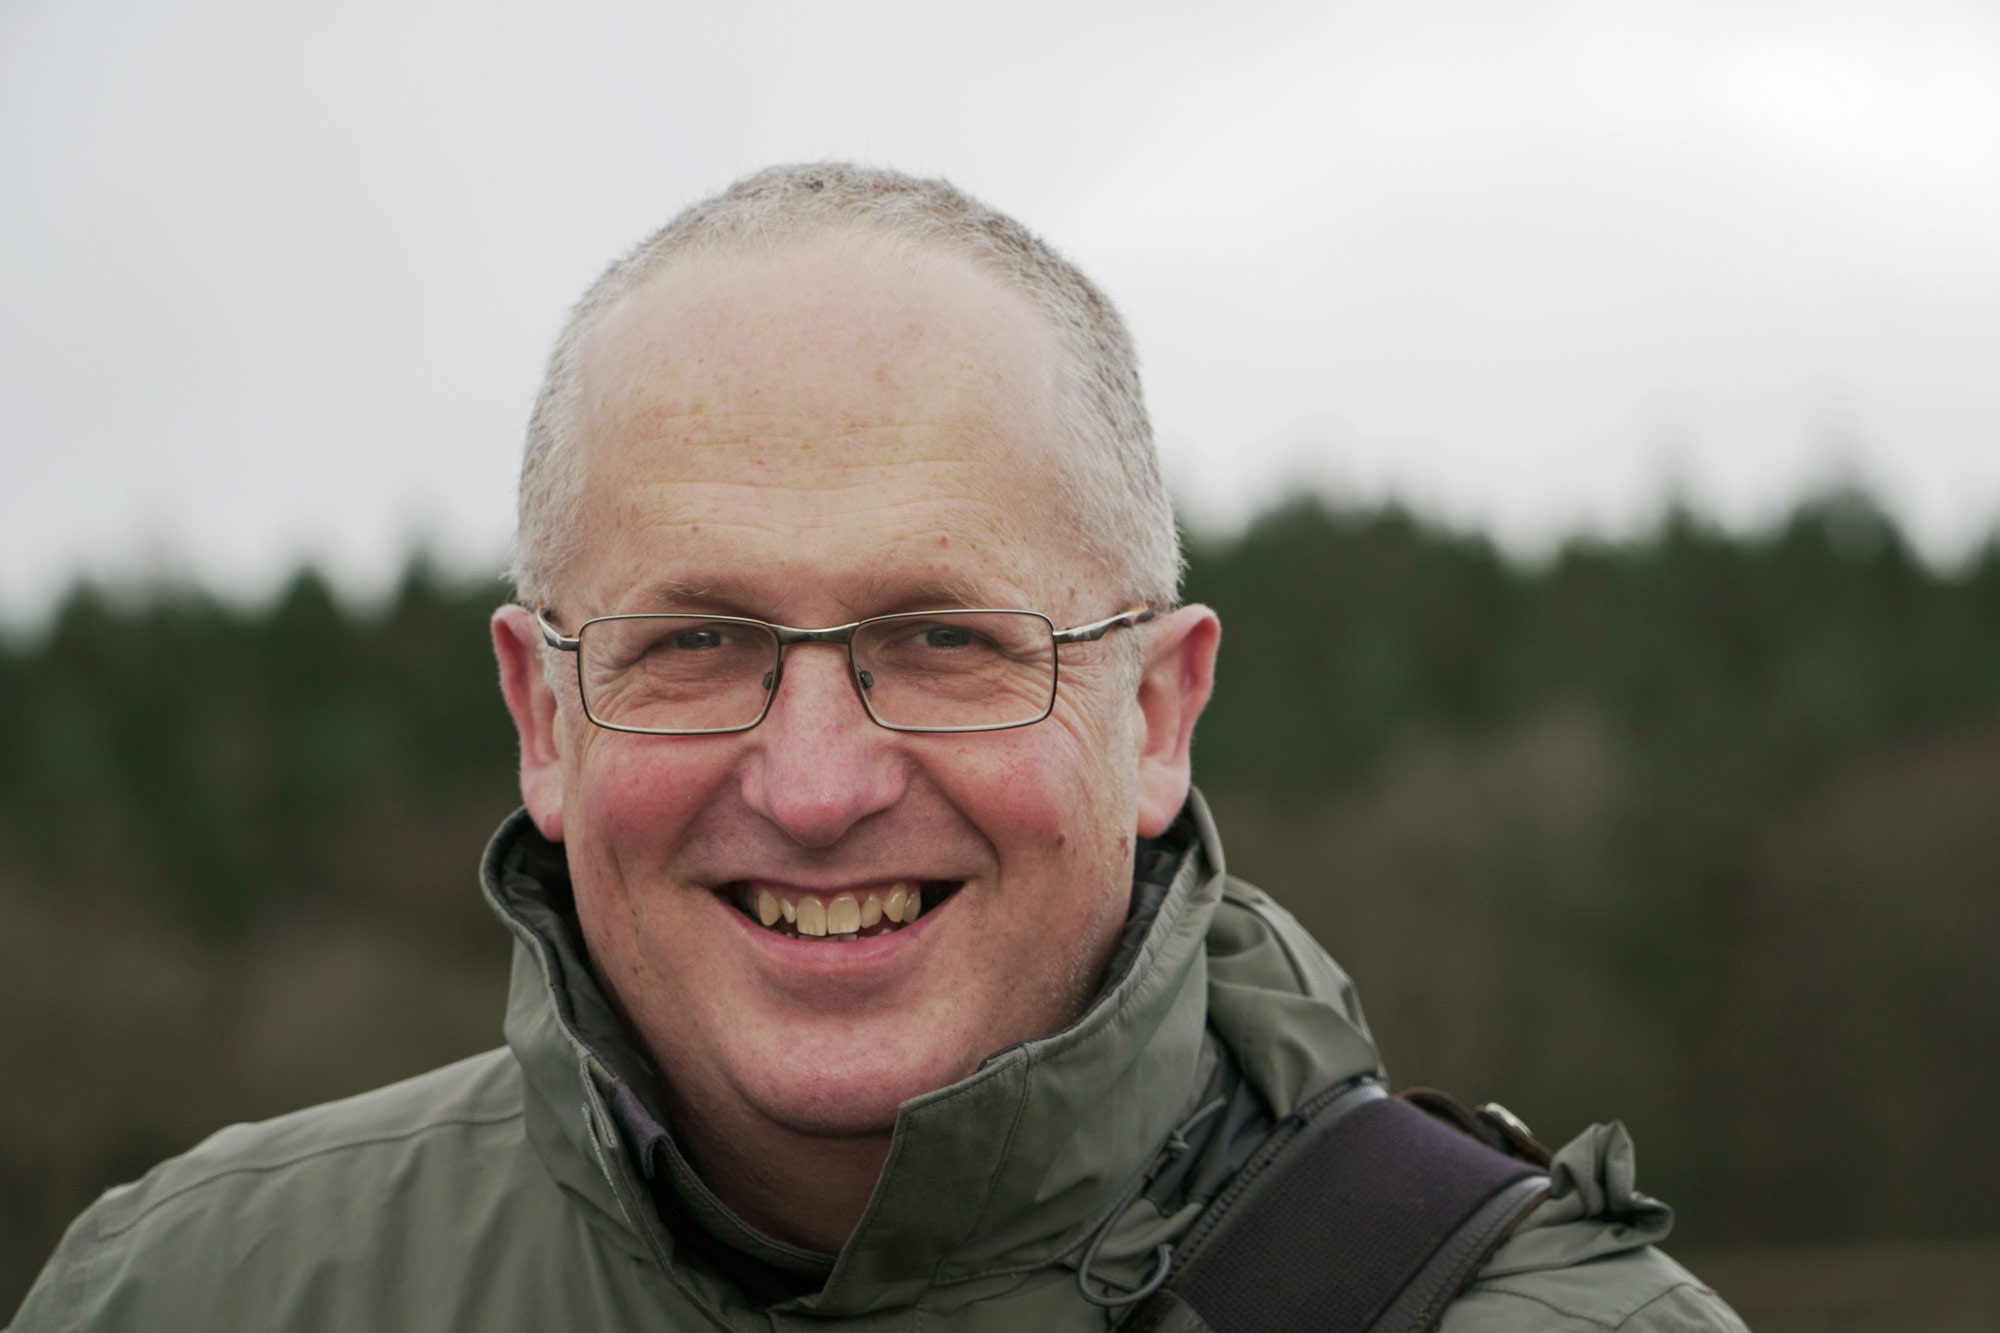 Tim Cook, Editor of the Harrogate Informer